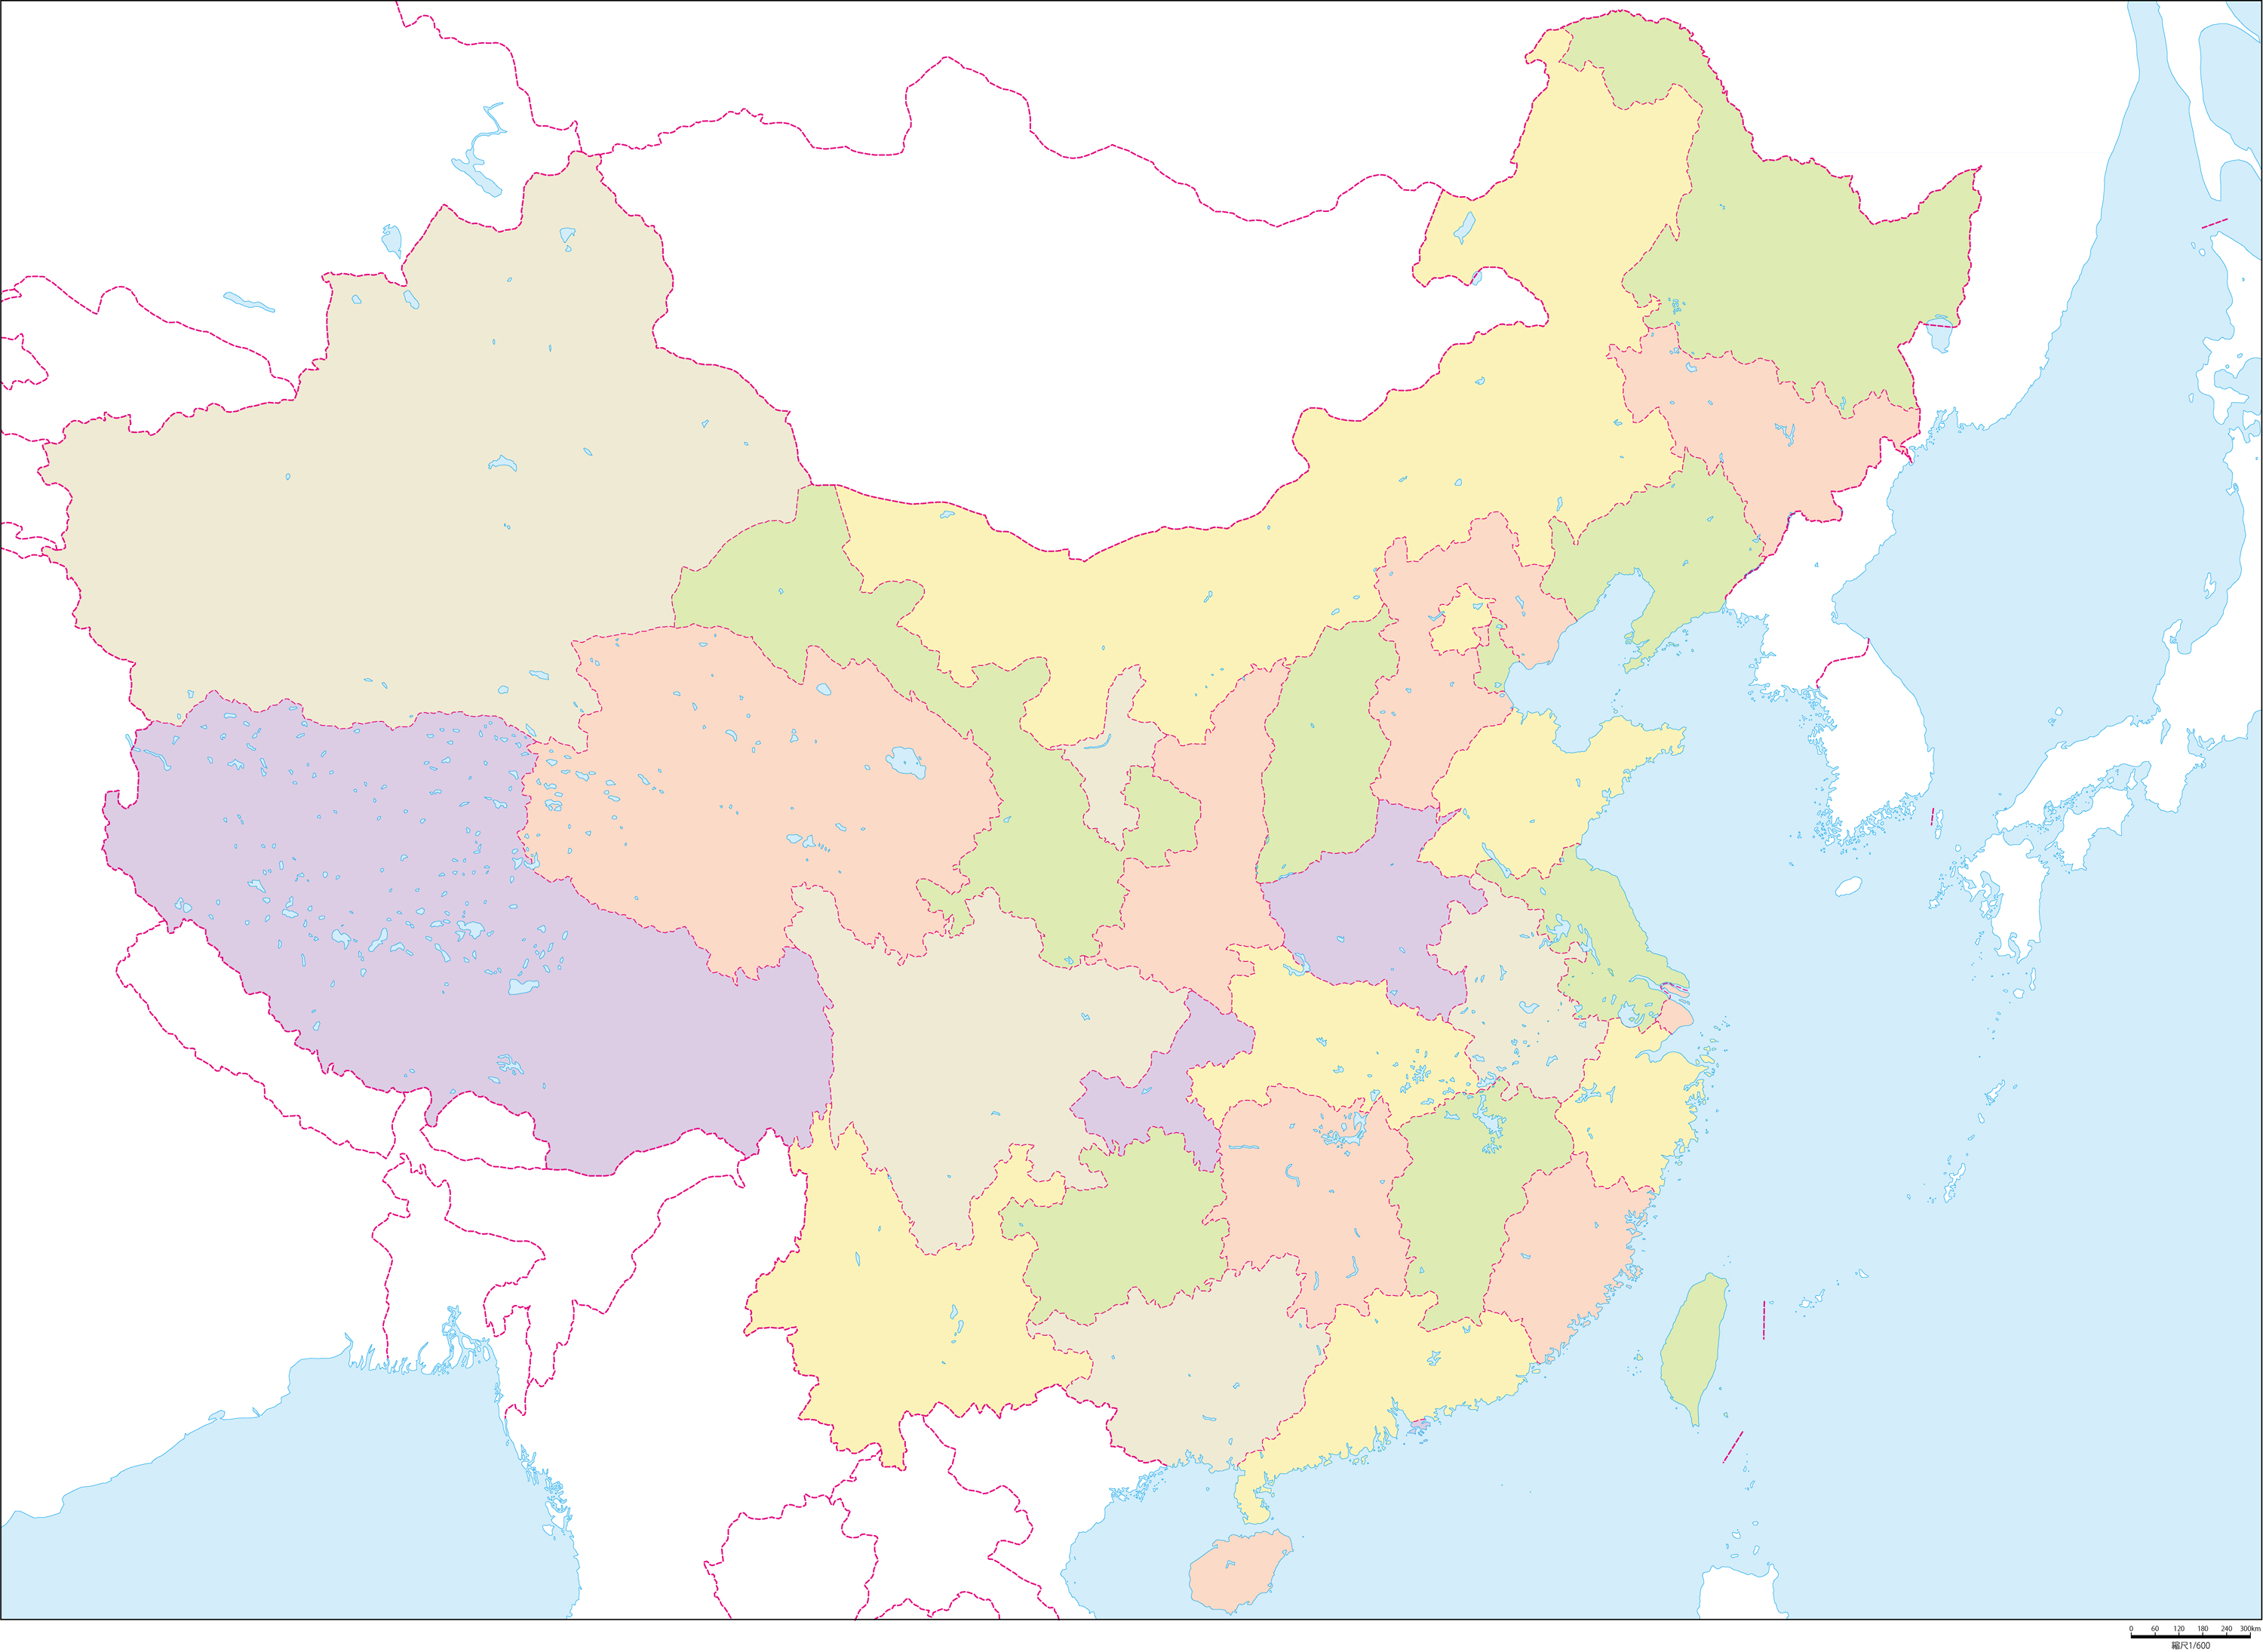 中国の地図 白地図 中華人民共和国全土地図